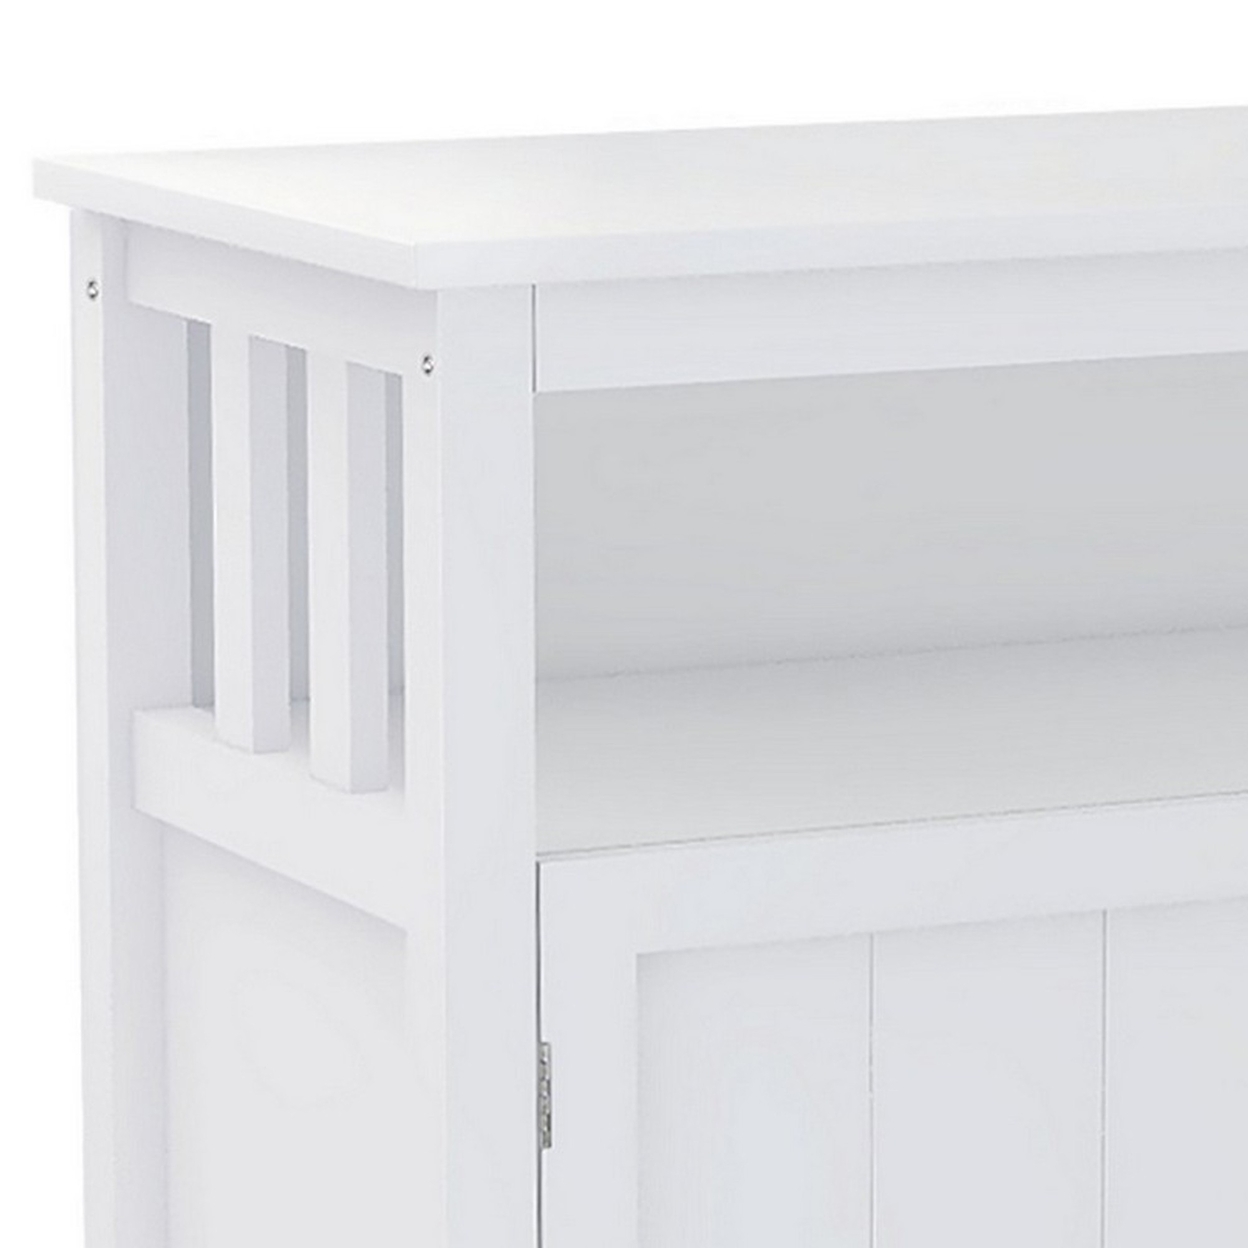 Zoh 40 Inch Double Door Sideboard Cabinet Console With 1 Open Shelf, White - Saltoro Sherpi